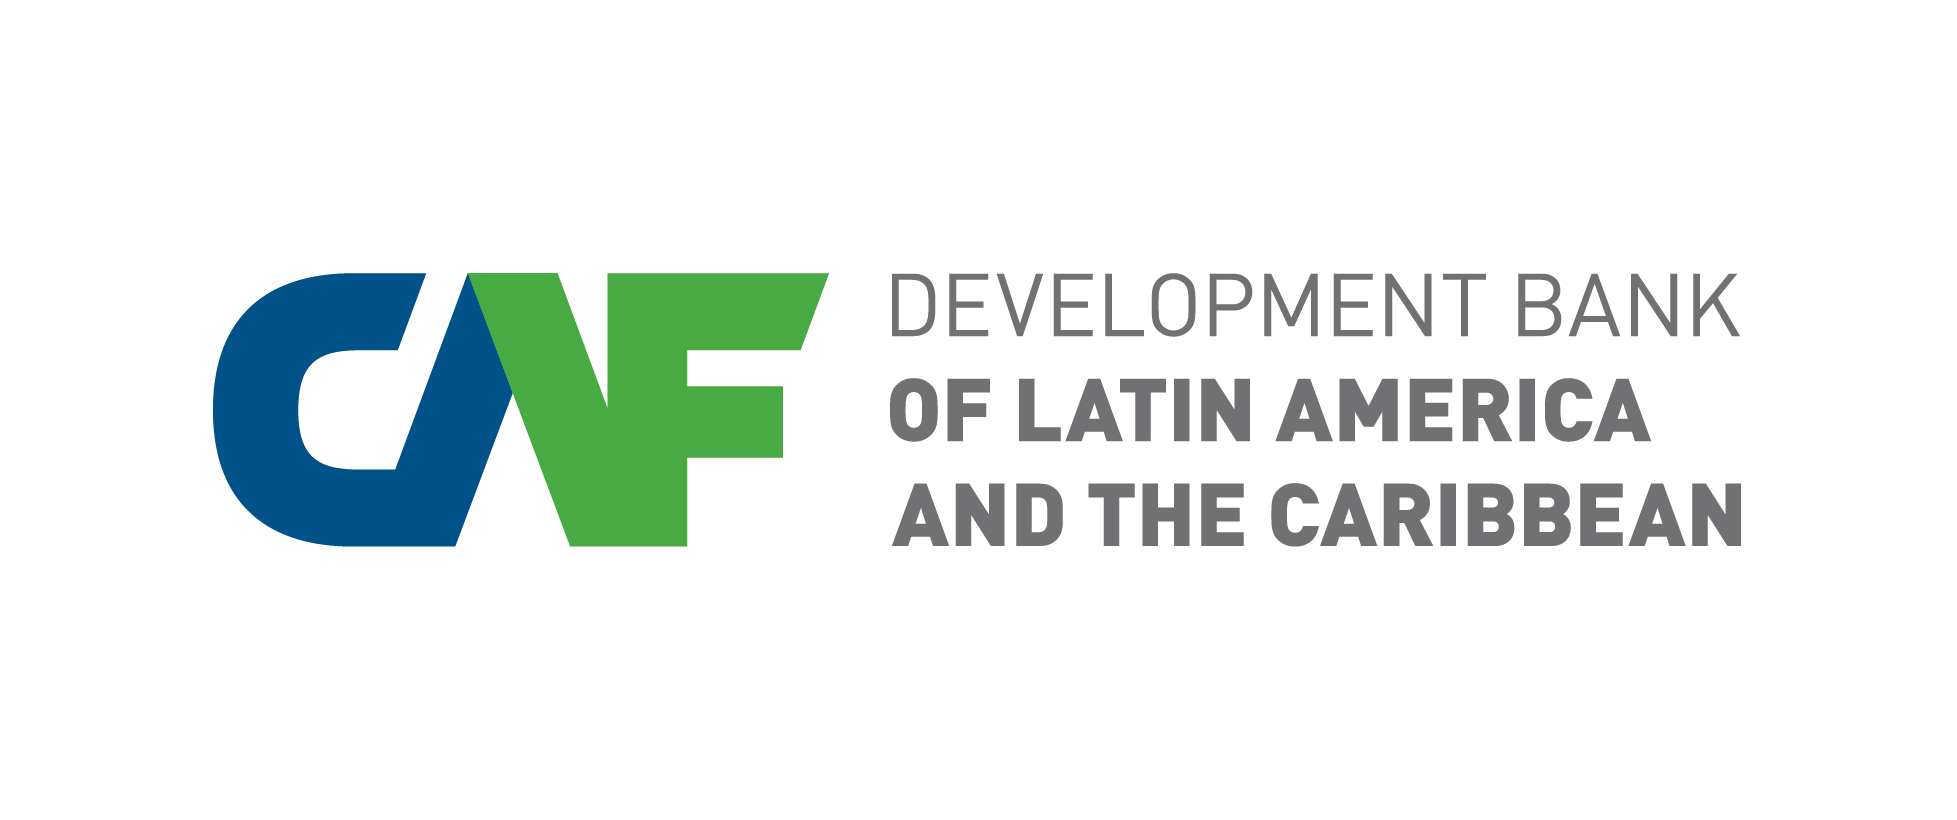 Development Bank of Latin America